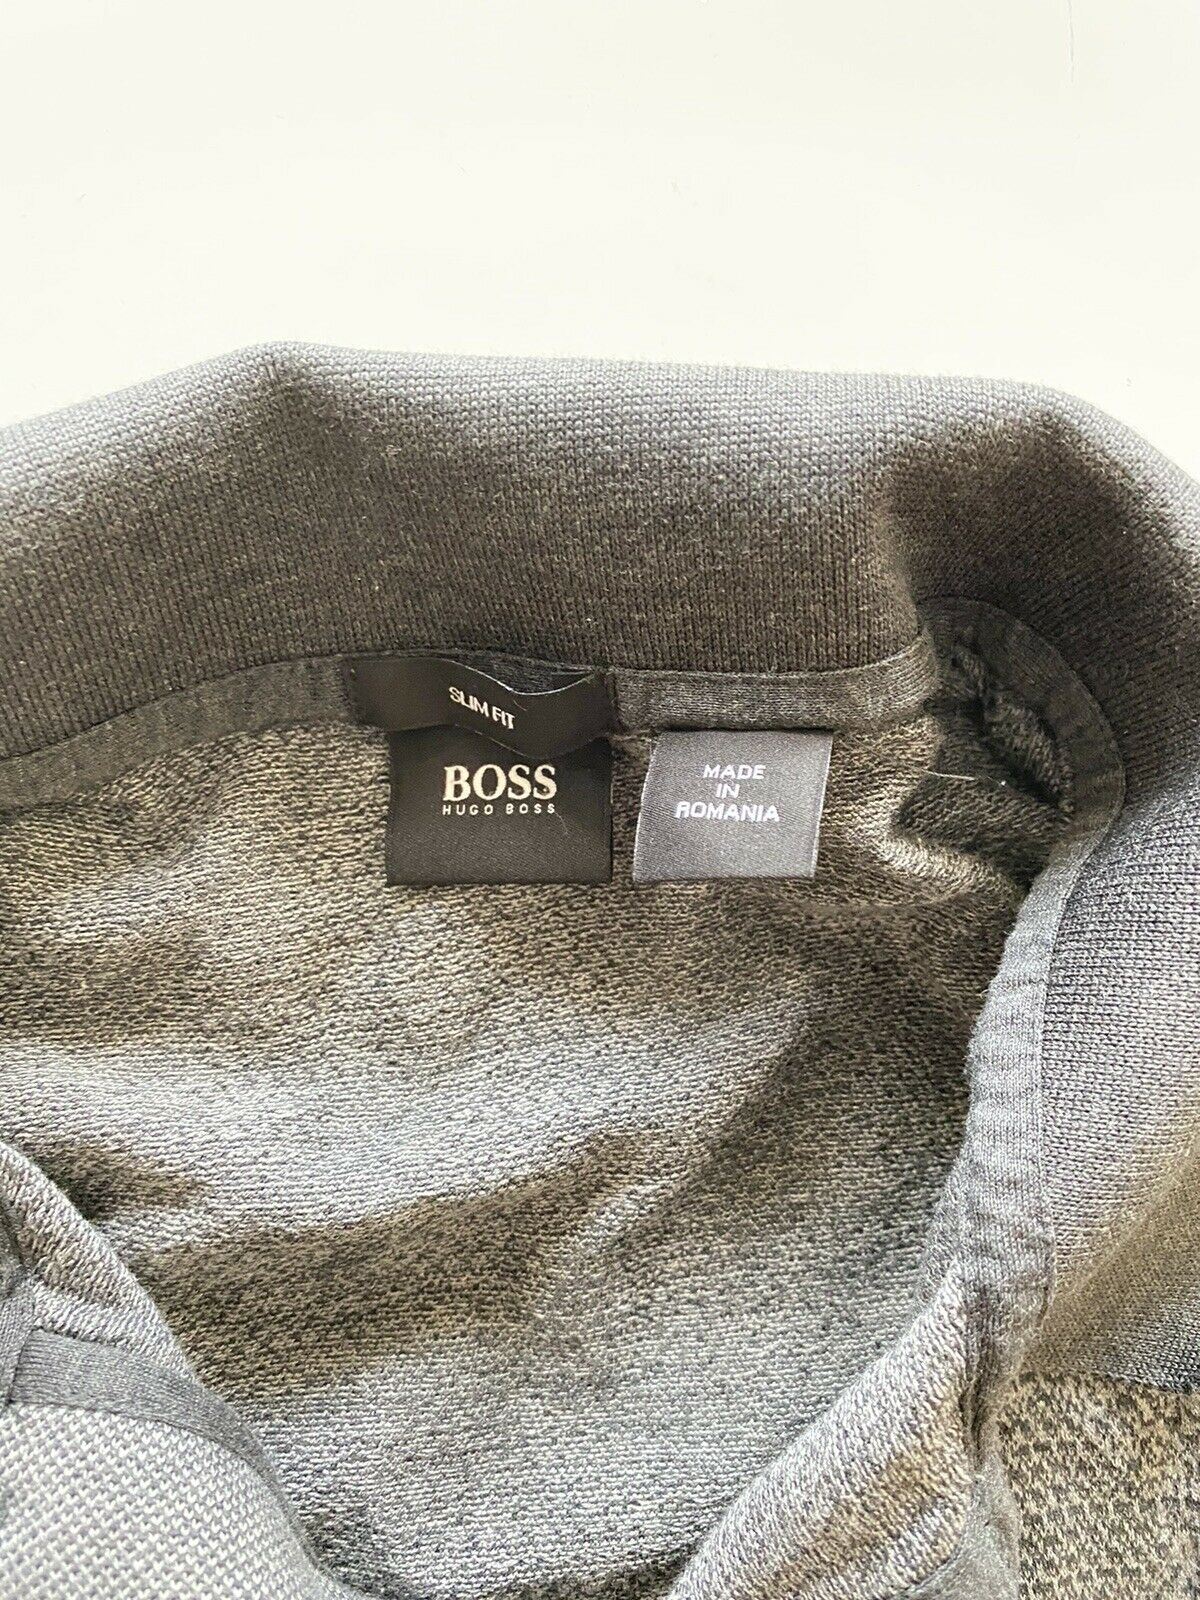 BOSS Hugo Boss Slim Fit Polo Shirt XL (Fits M-L) Gray